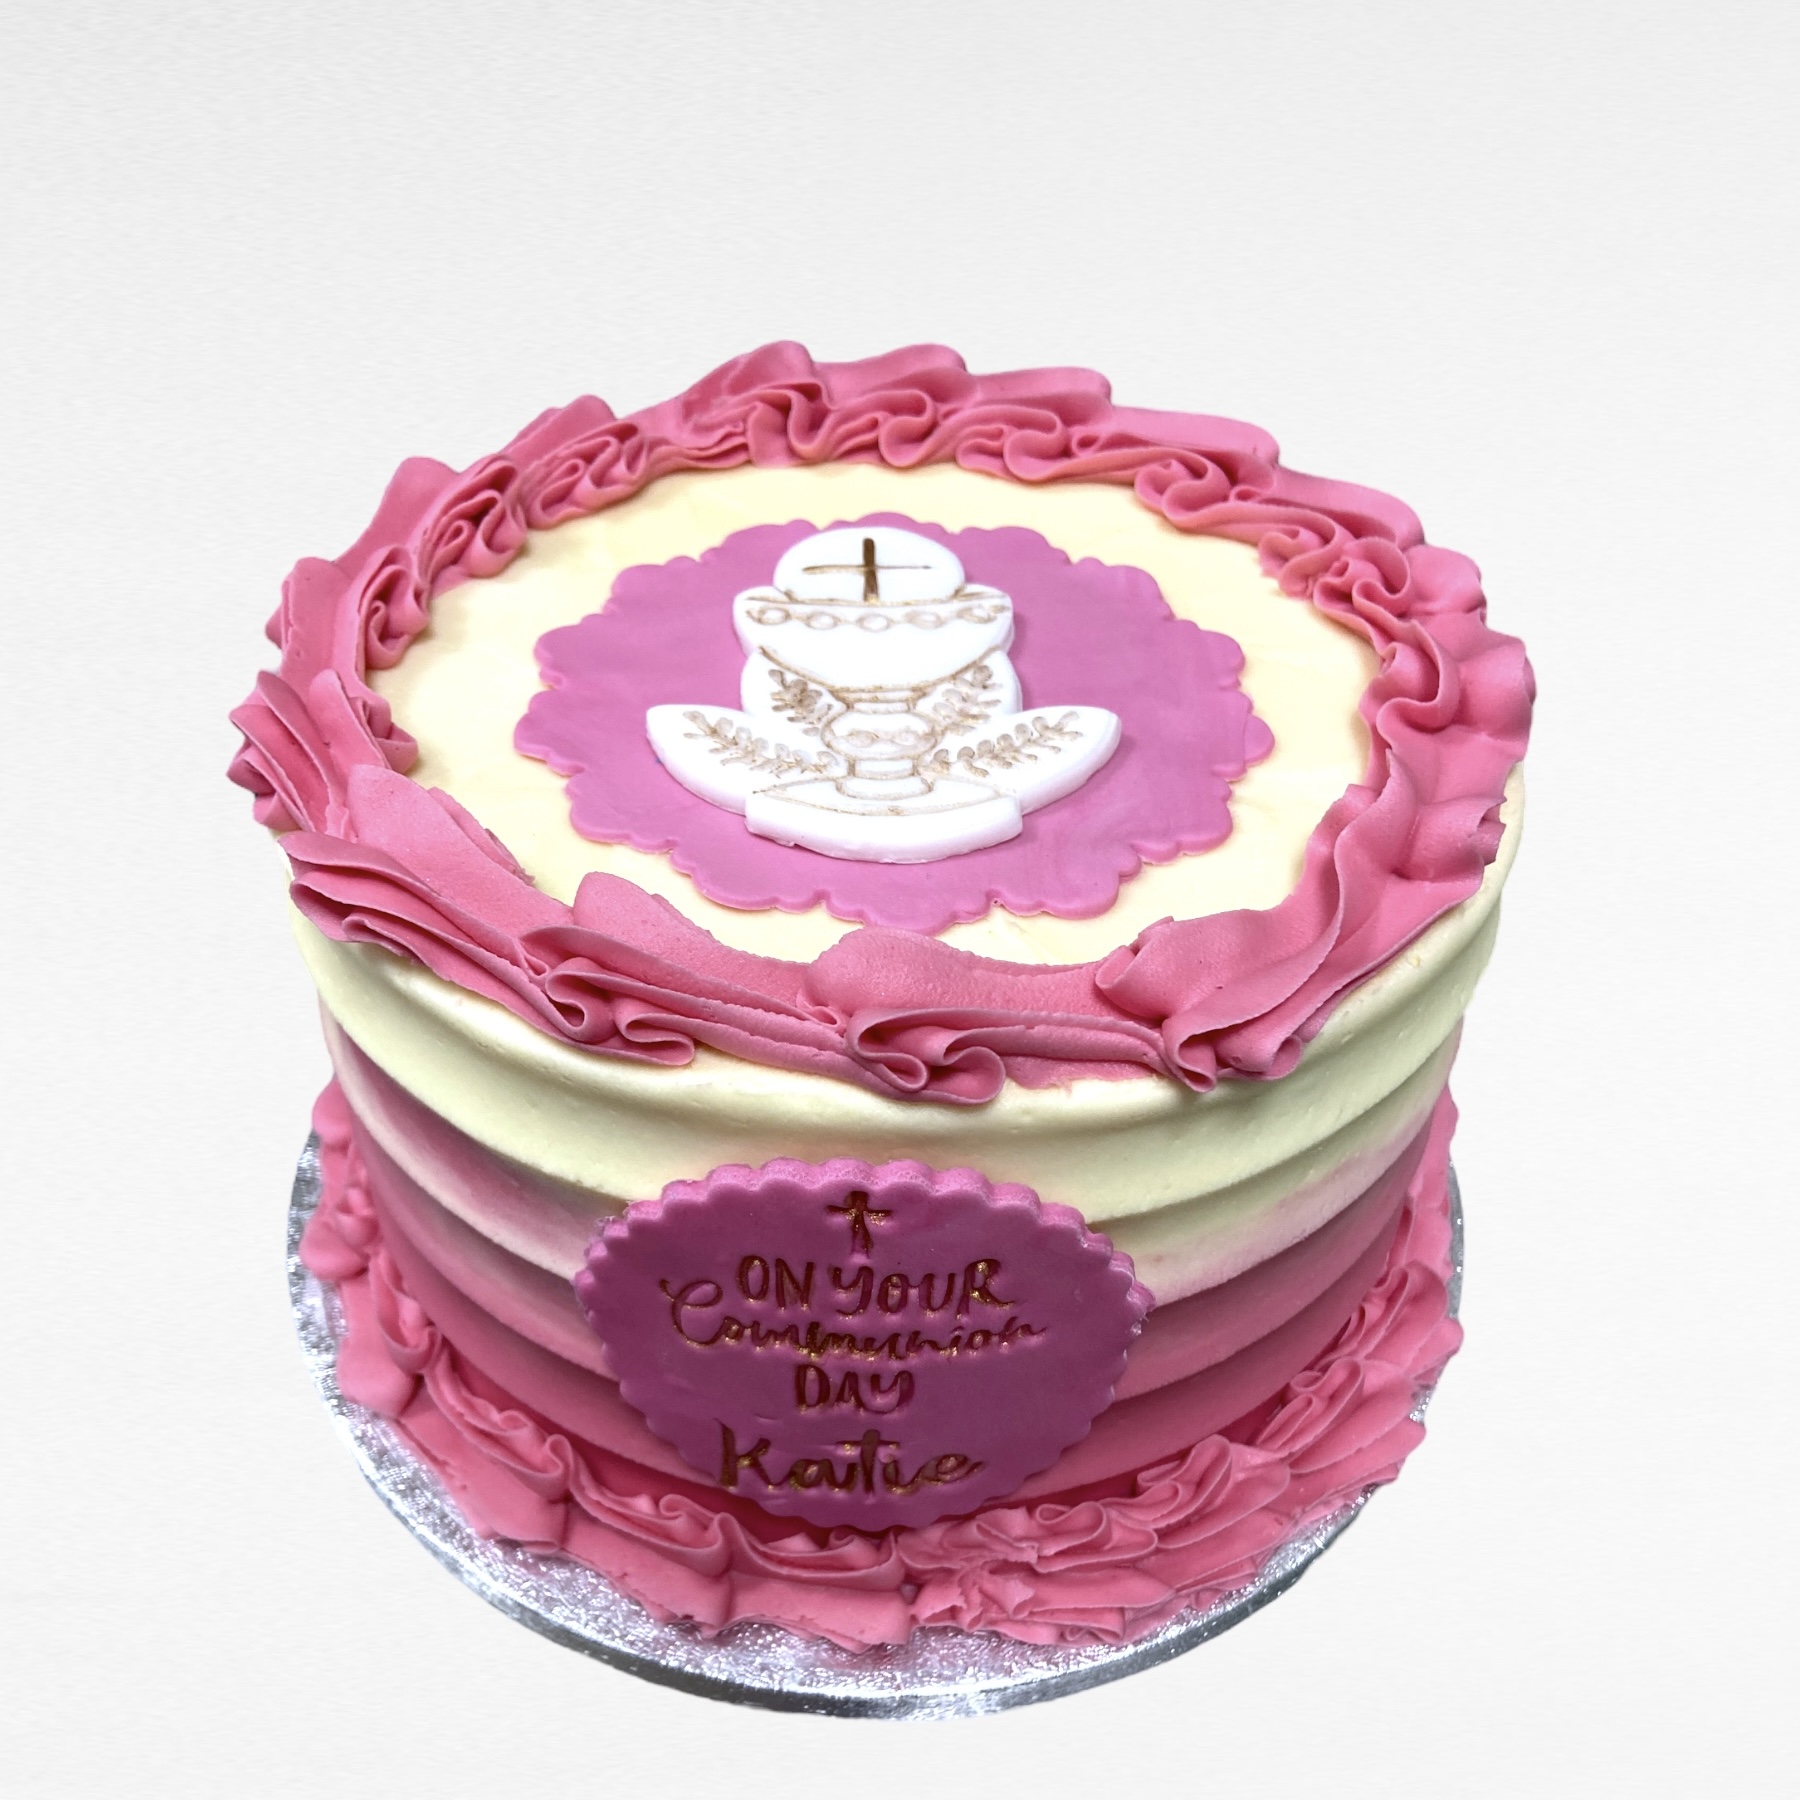 Confirmation cake - Decorated Cake by Tortebymirjana - CakesDecor